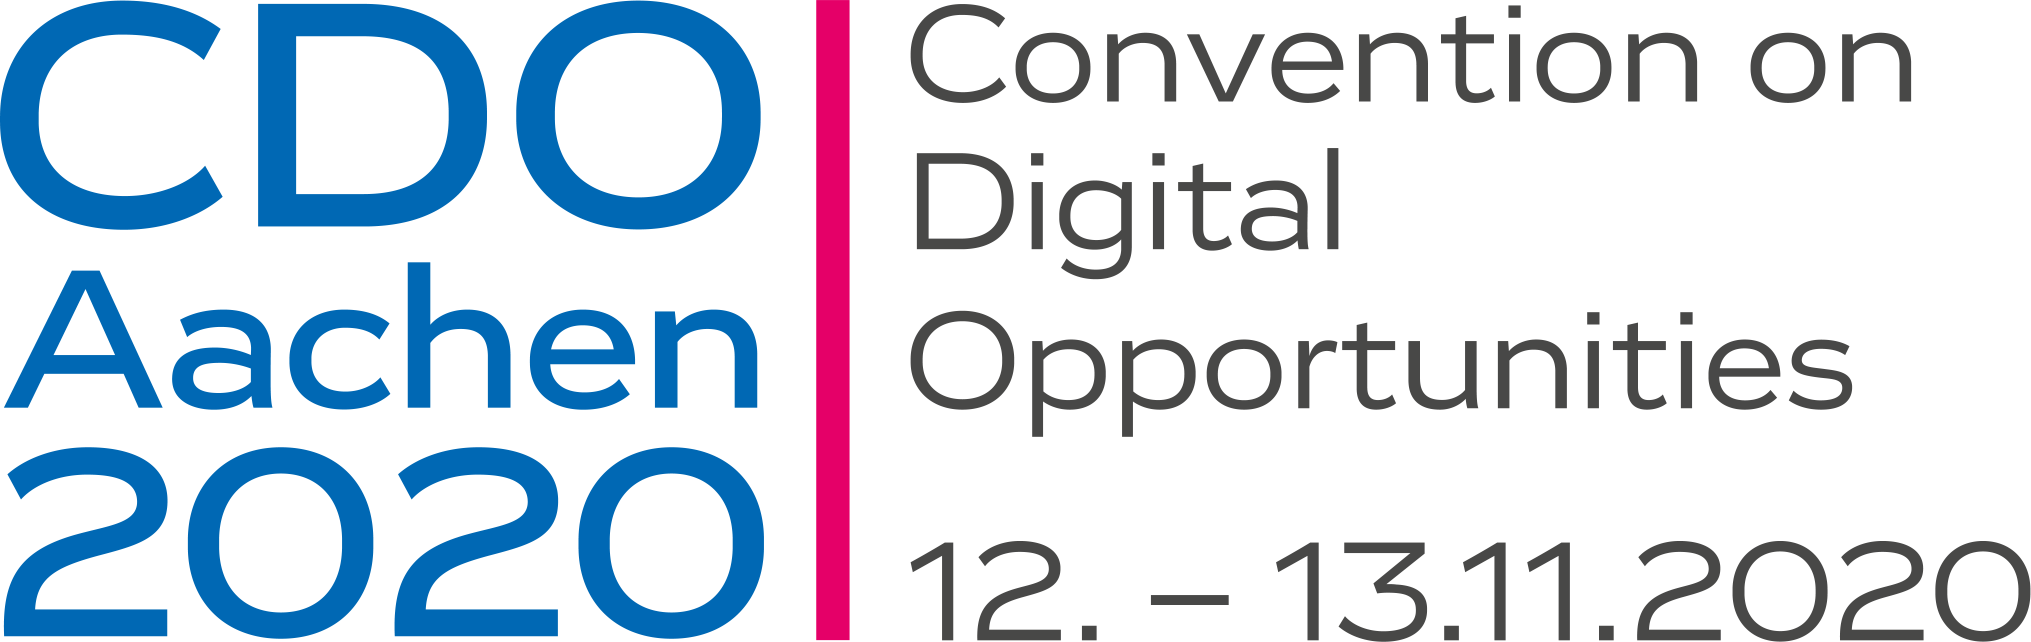 CDO Aachen 2020: Convention on Digital Opportunities